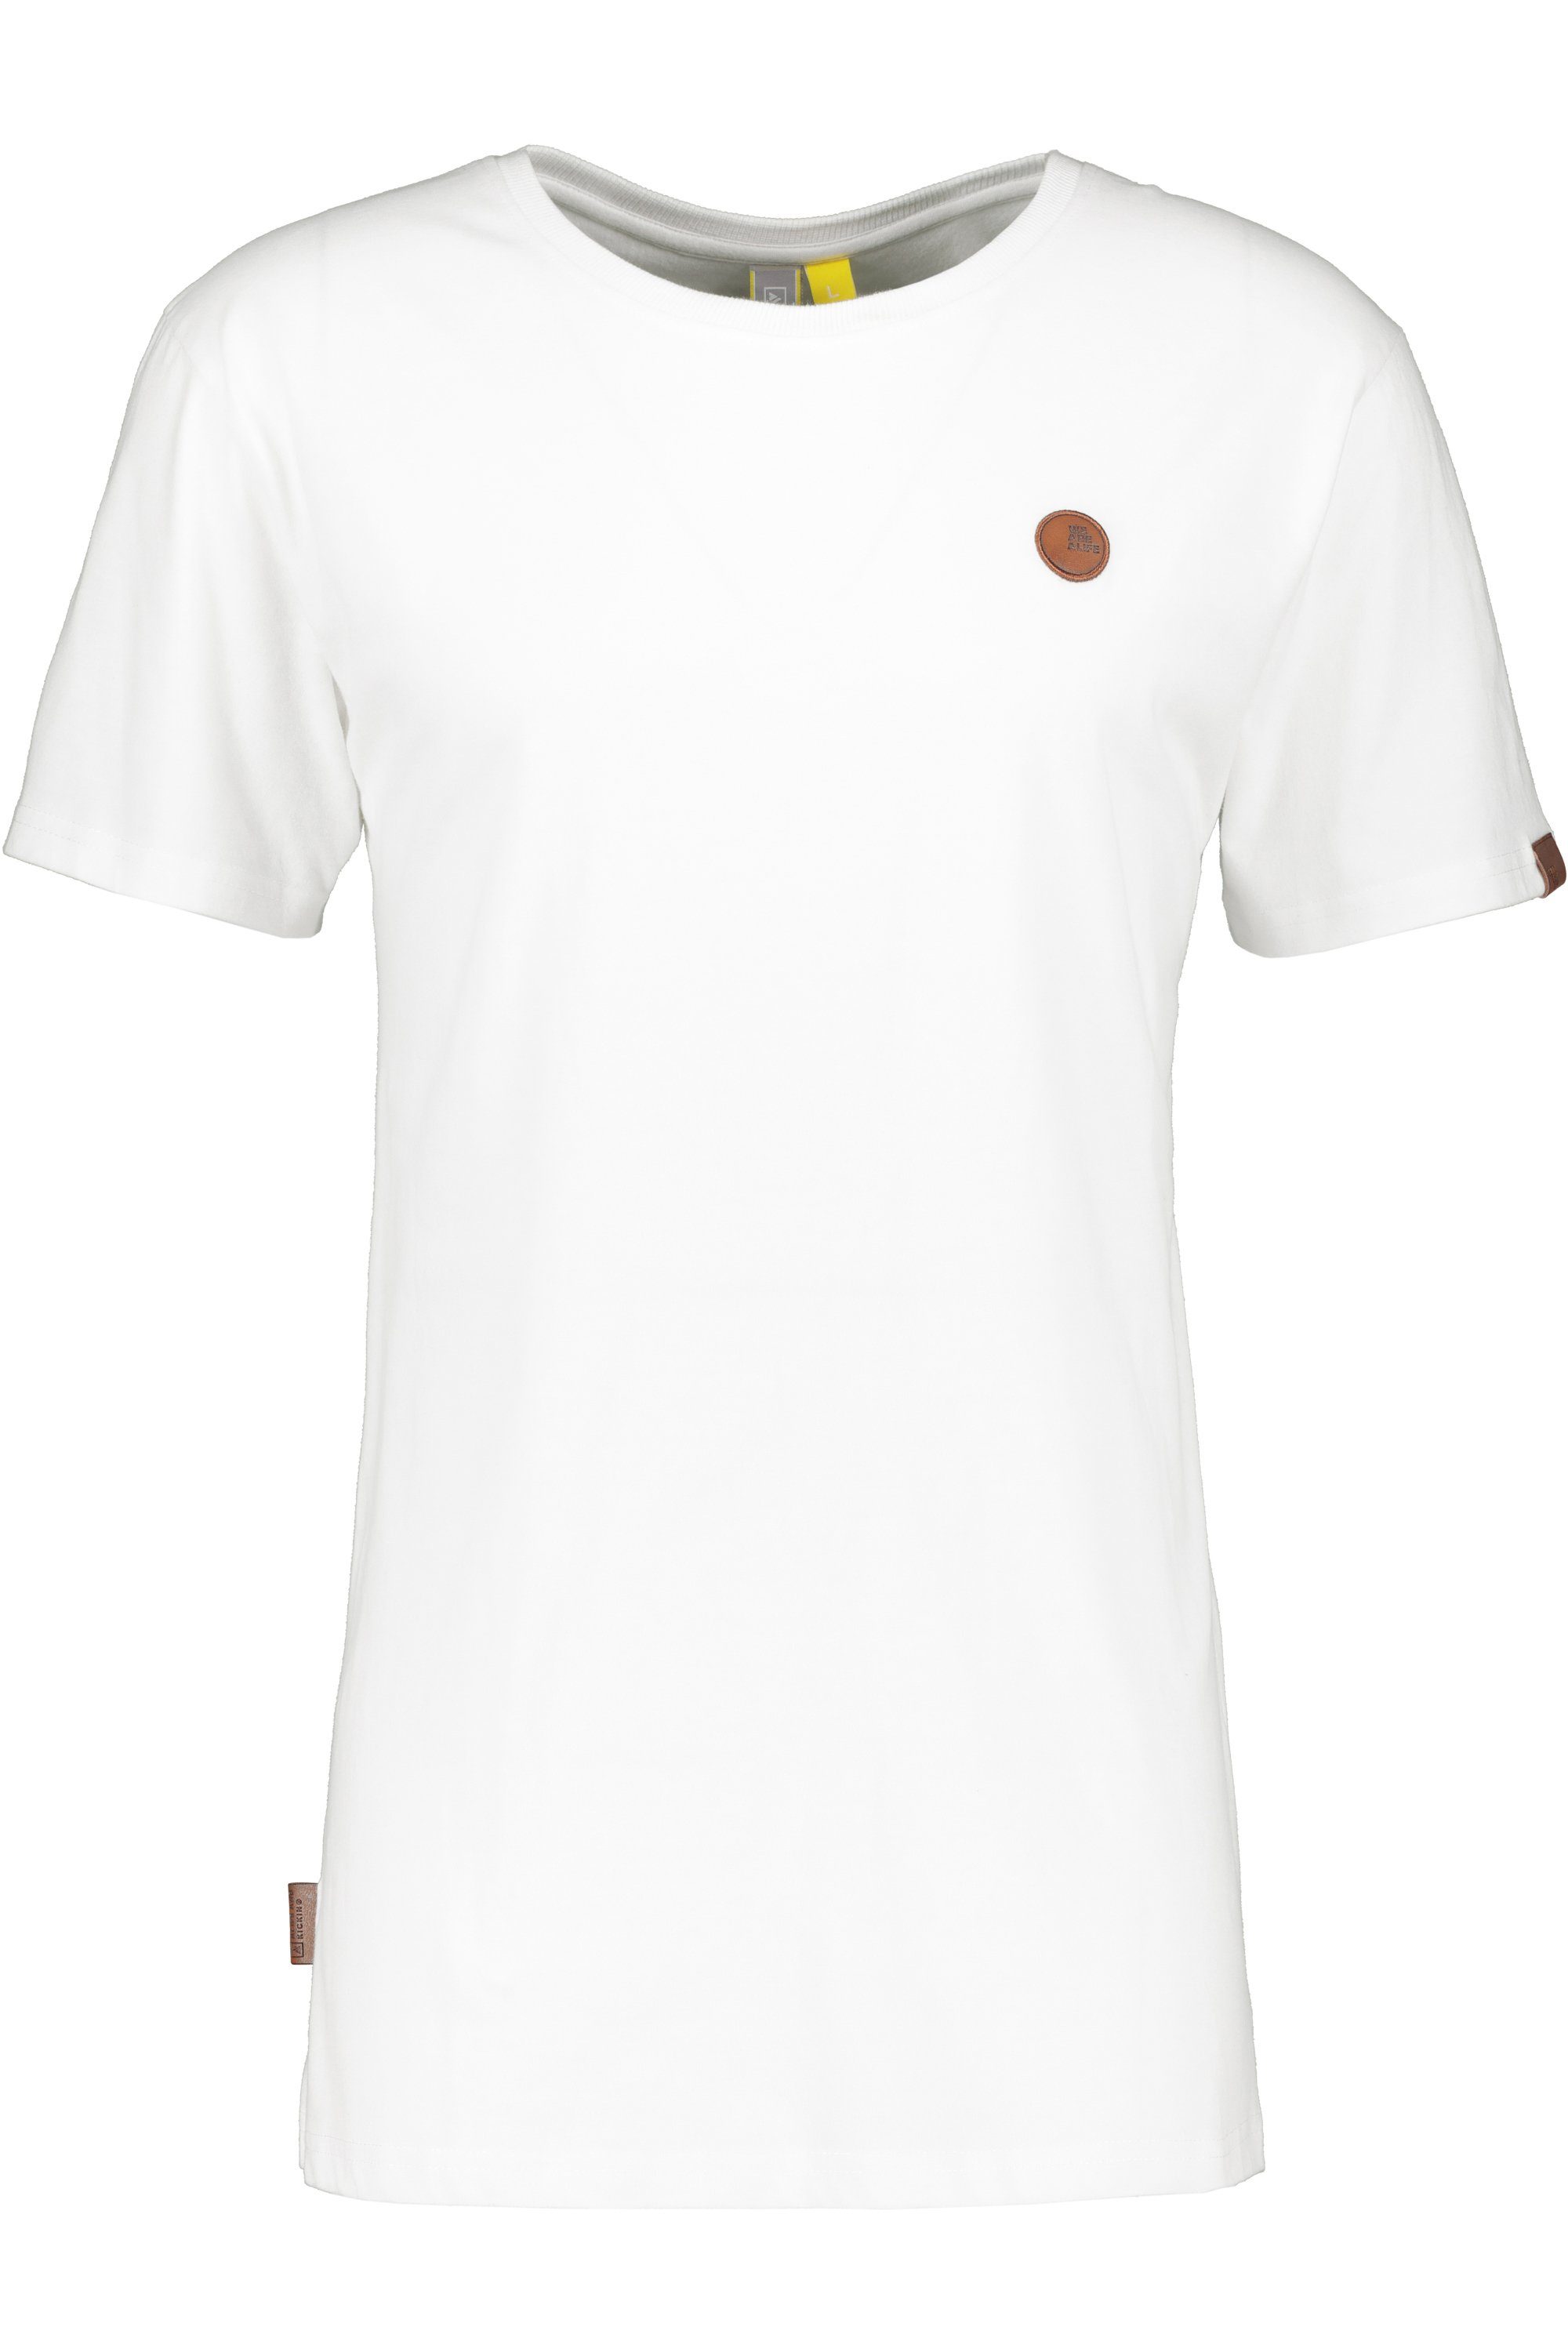 Alife & T-Shirt cloudy MaddoxAK T-Shirt Herren Kickin